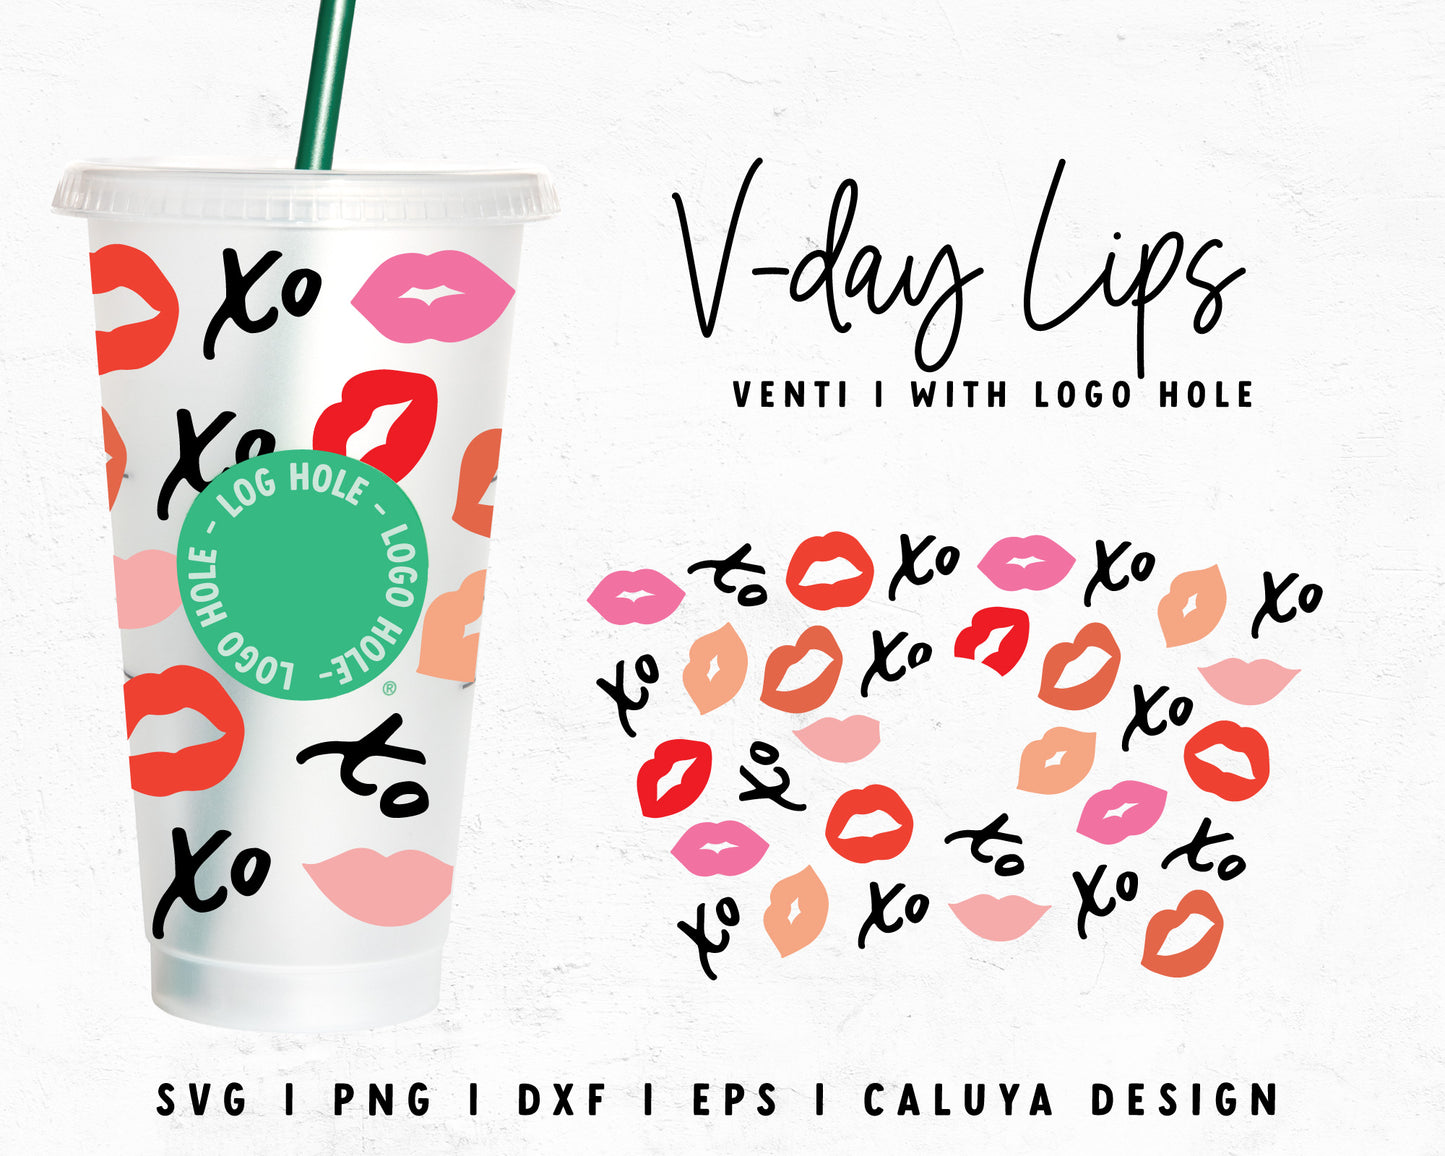 Venti Cup With Hole xo Lips Wrap Cut File for Cricut, Cameo Silhouette | Free SVG Cut File